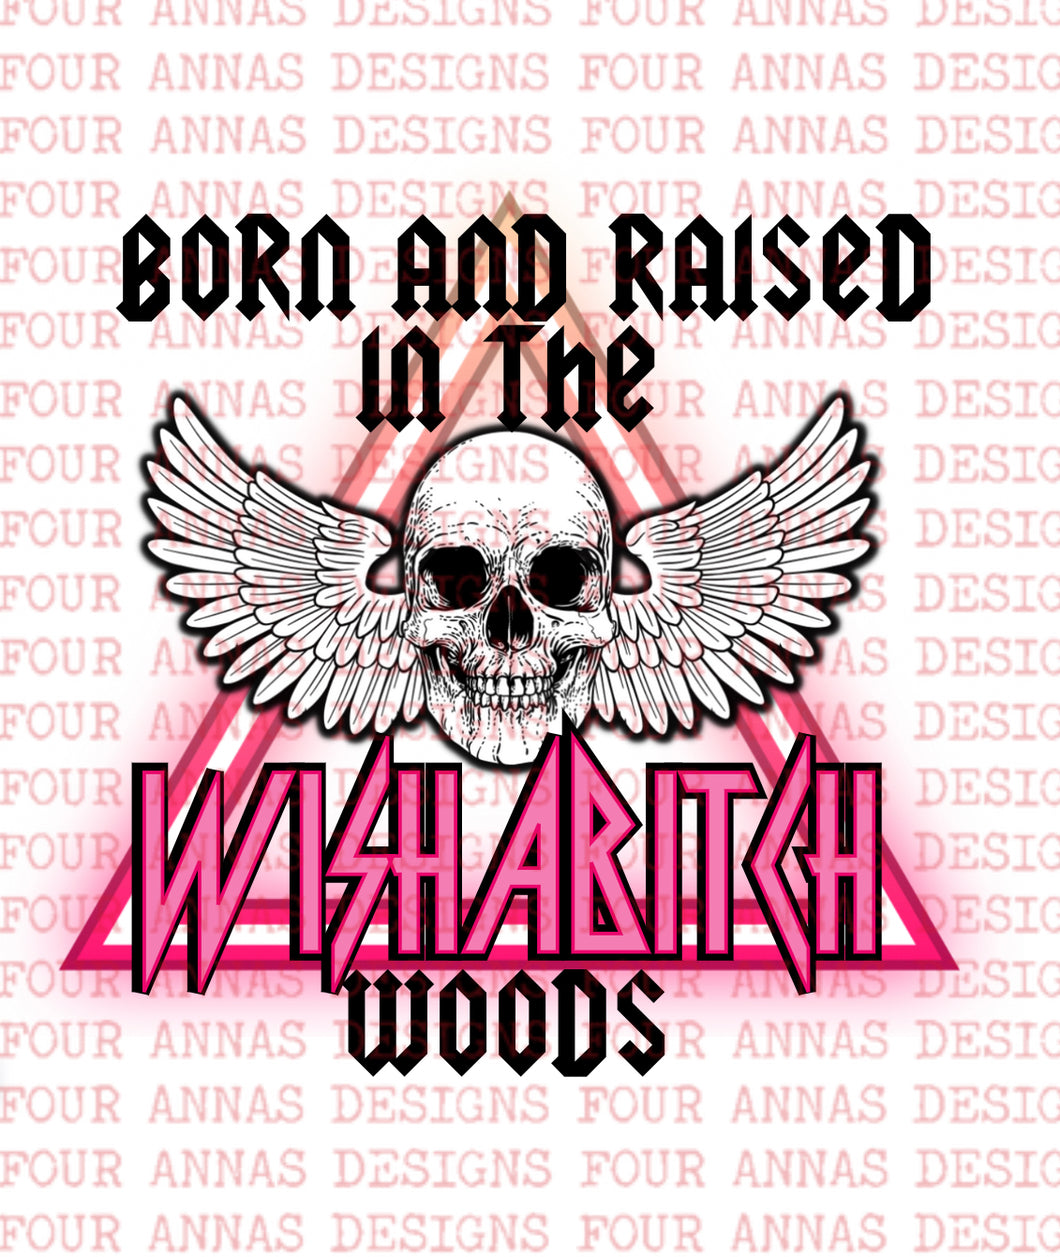 Born and raised Wishabitch woods